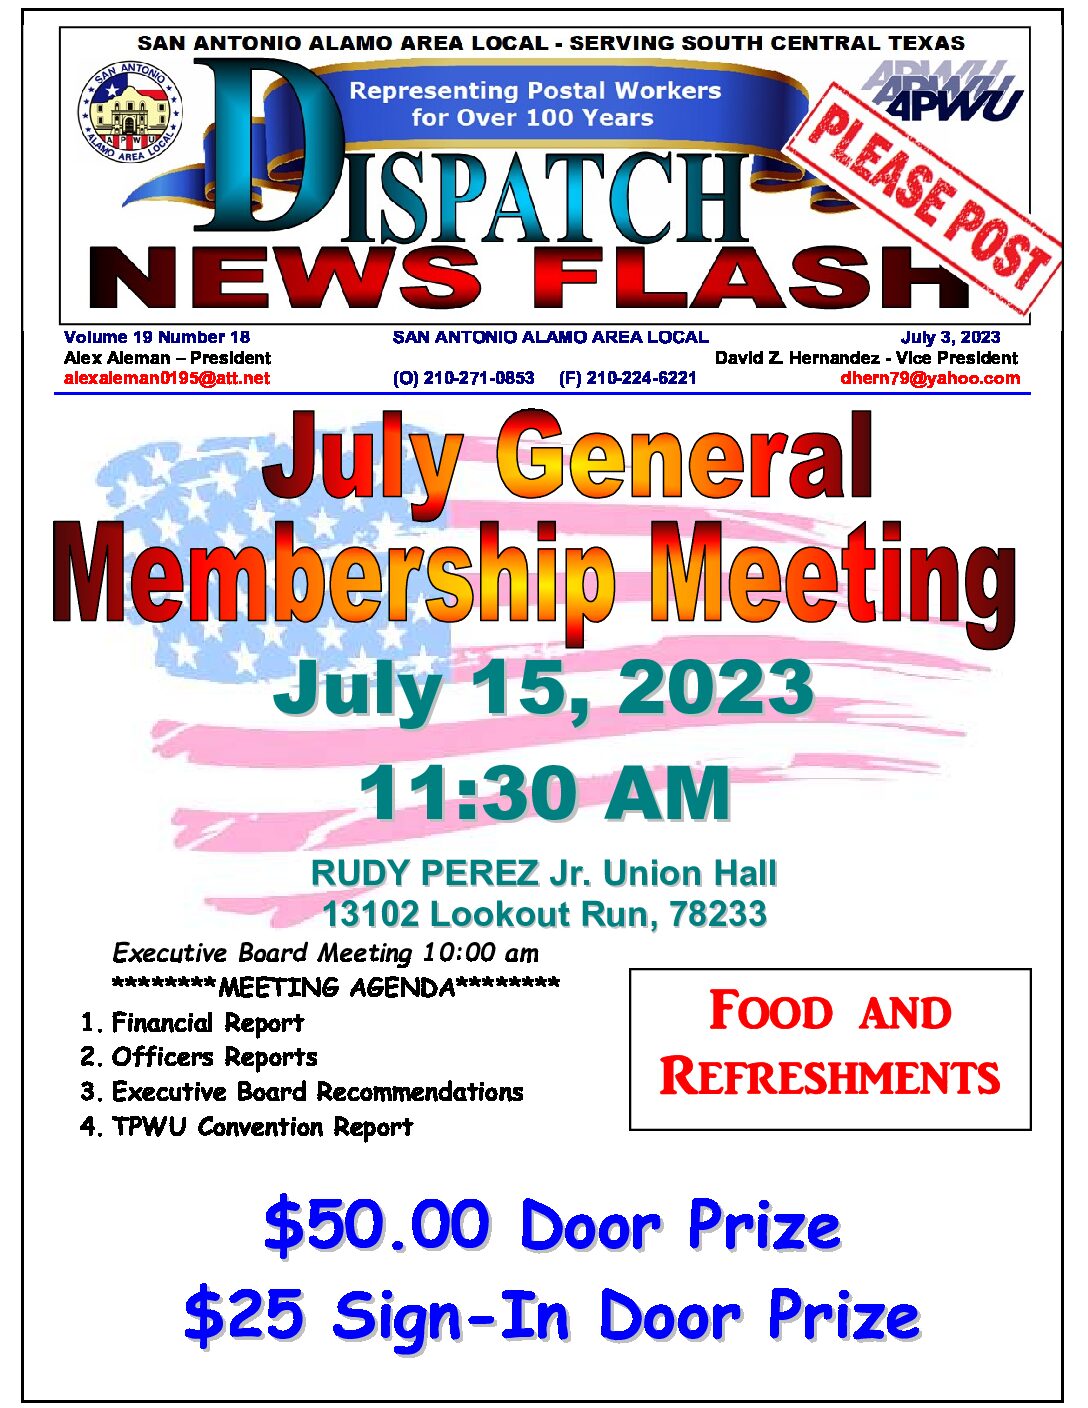 NewsFlash 19-18 July General Membership Meeting Notice - 